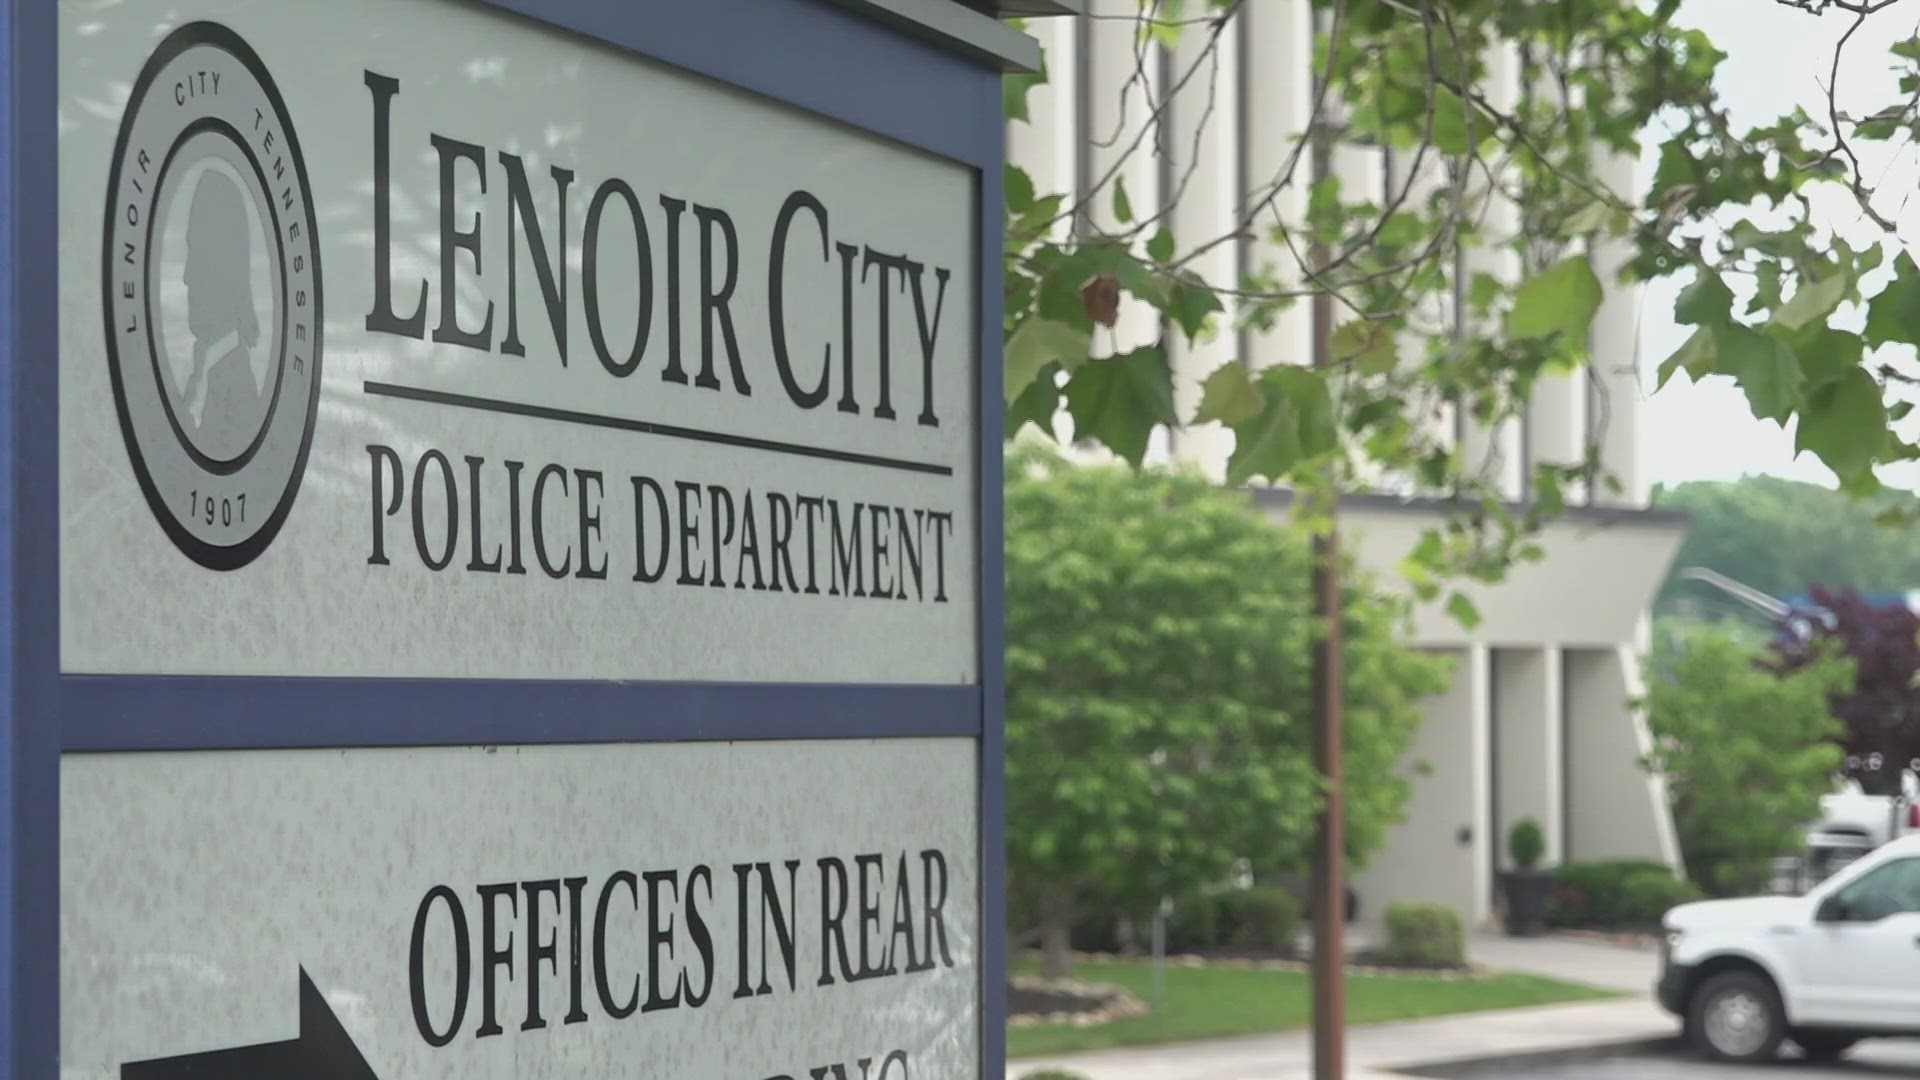 Mayor Man dead after accidental shooting at Lenoir City High School